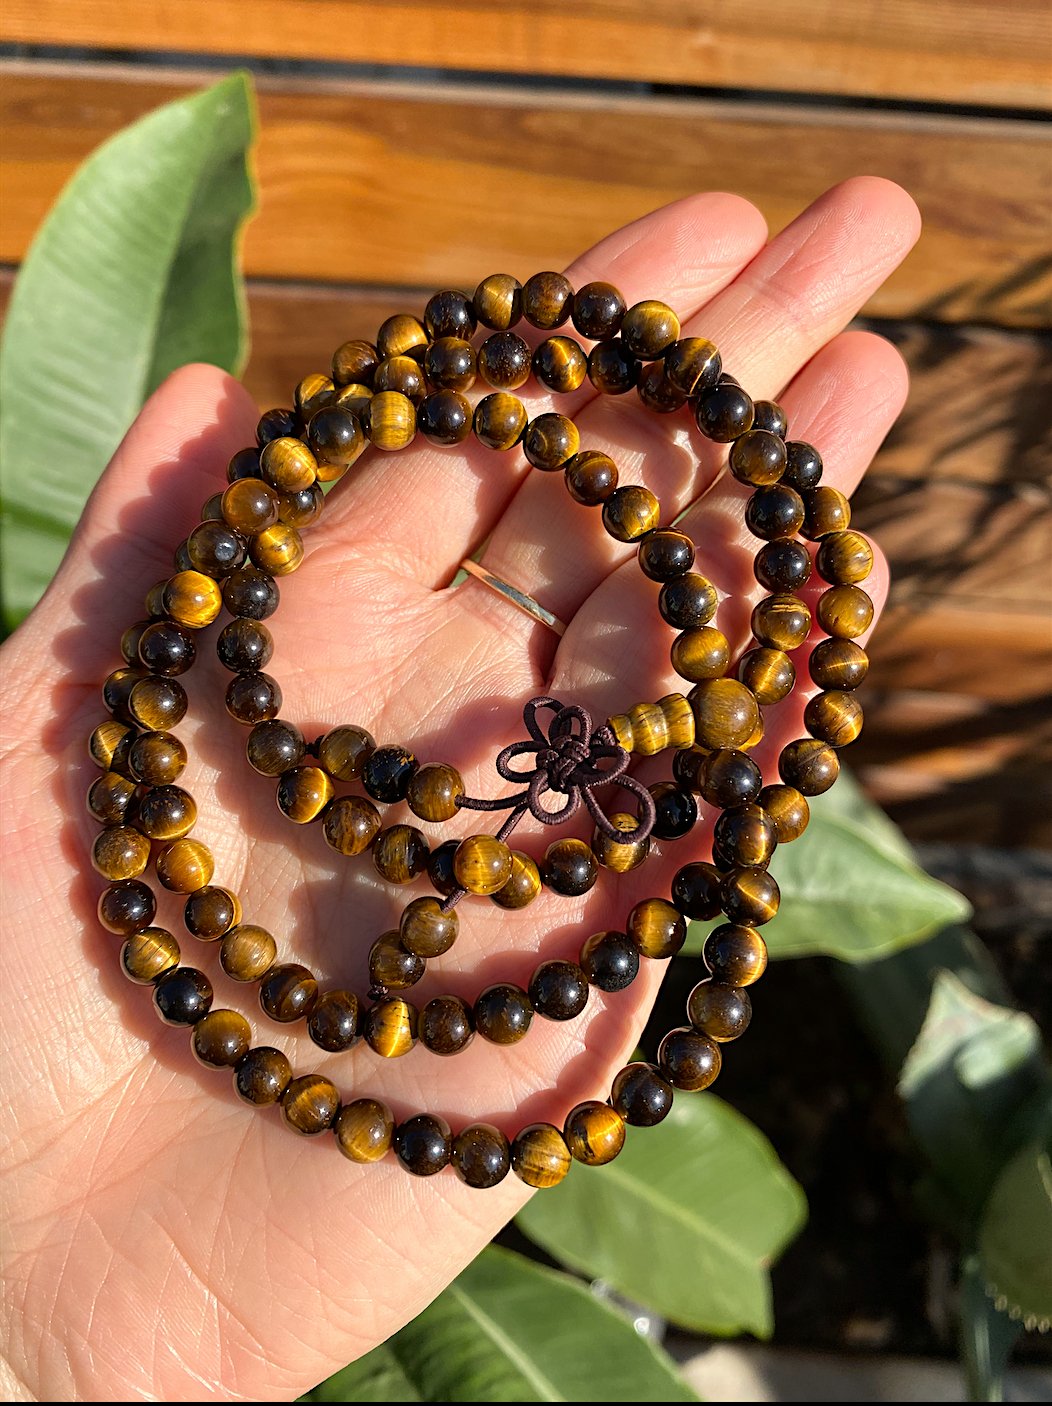 Tiger's Eye Mala Beads w/ Tassel |Prayer Bead Necklace - Shop Cosmic Healing